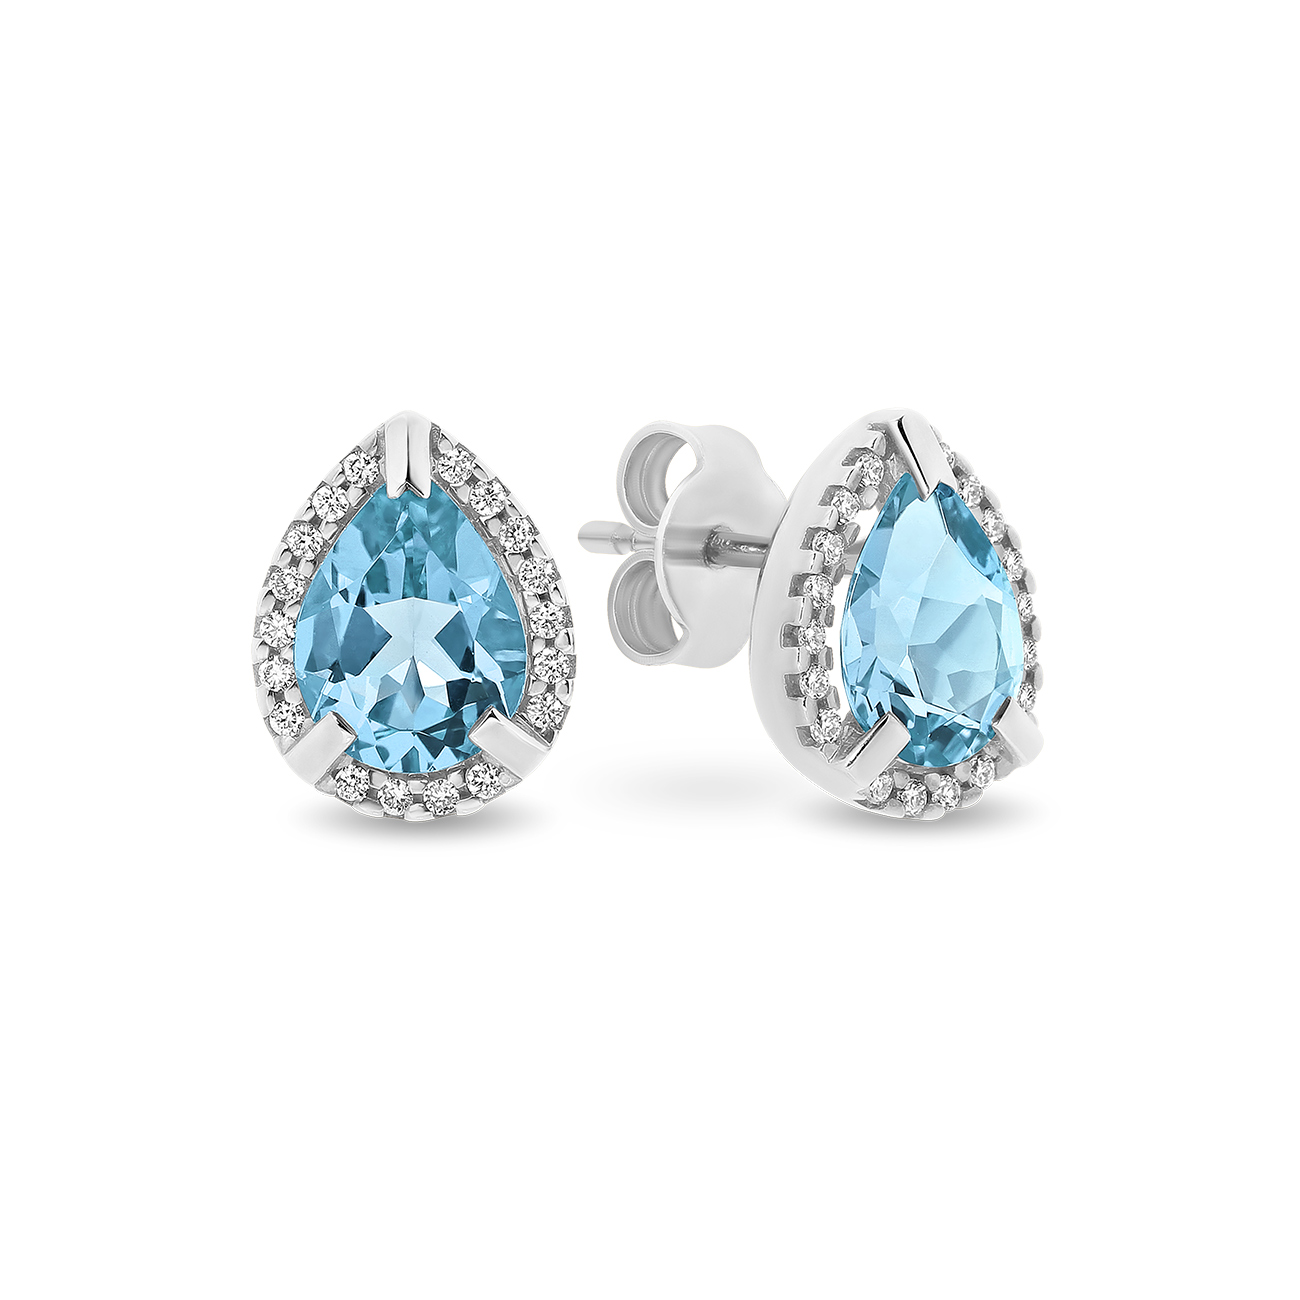 Blue Topaz & Diamond Pear Halo Stud Earrings In 18K White Gold 0.15ct TW